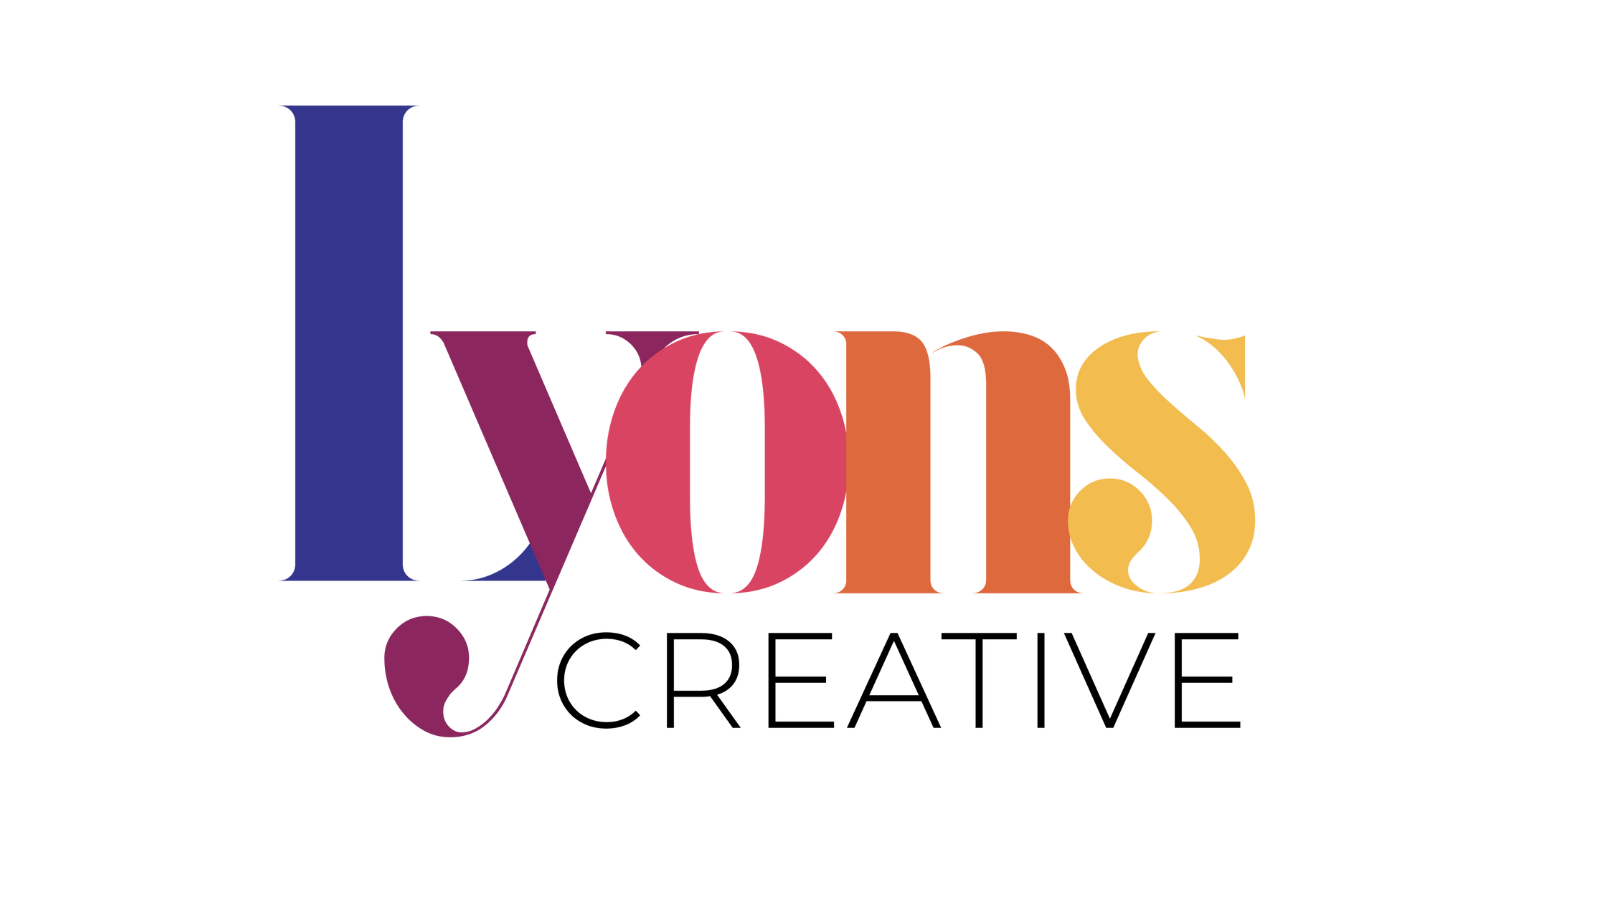 Lyons creative logo.